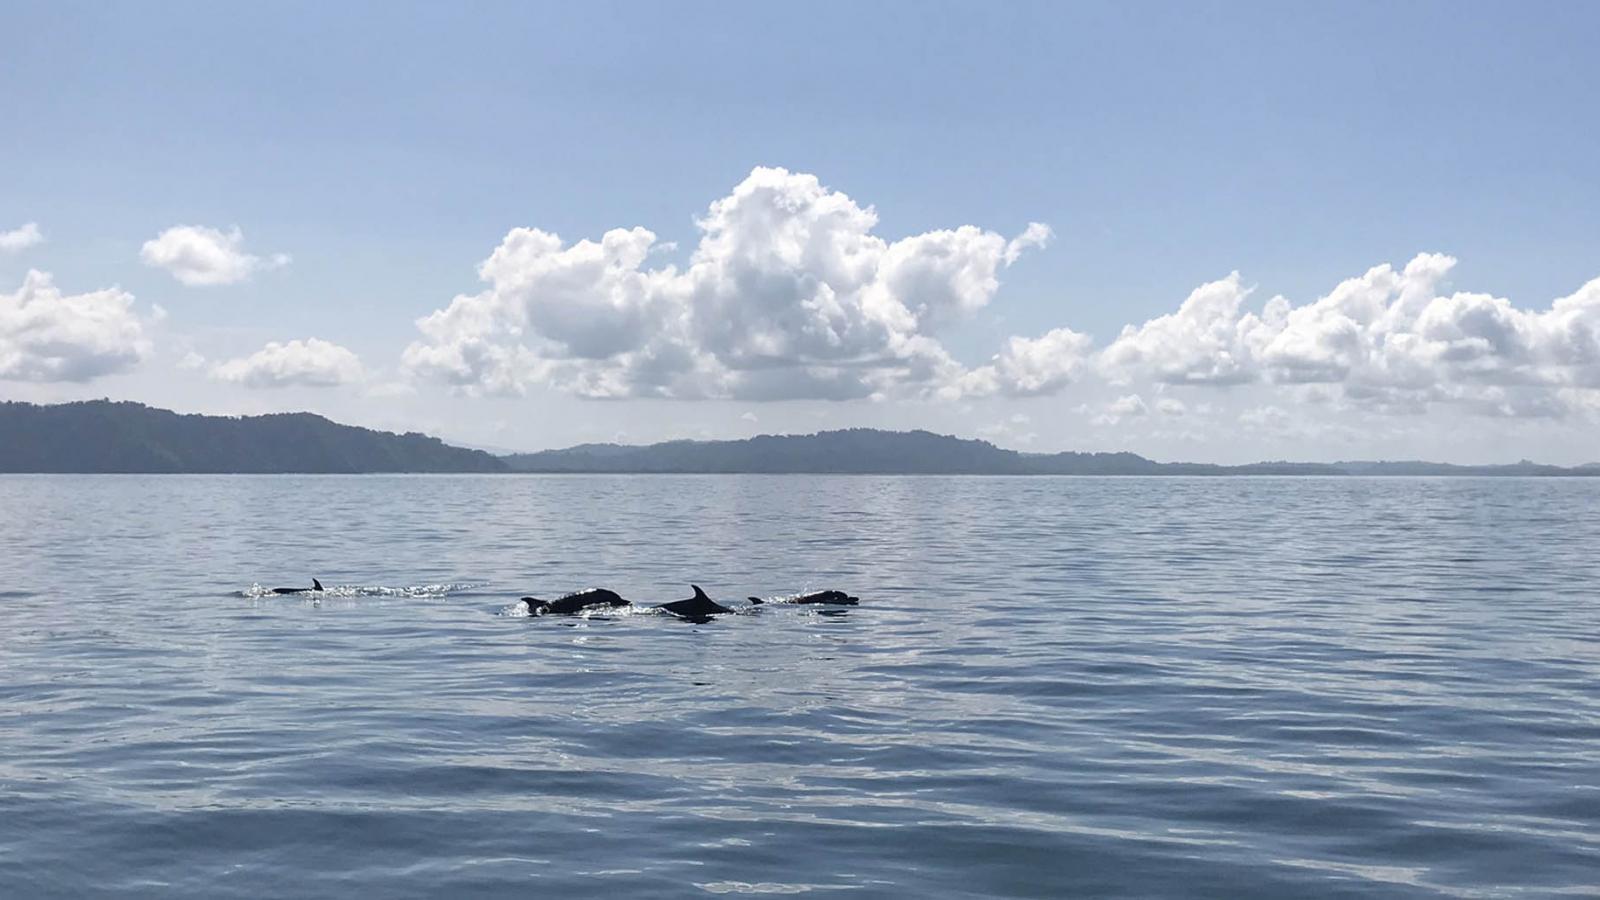 Dolphin spotting in Costa Rica's Golfo Dulce